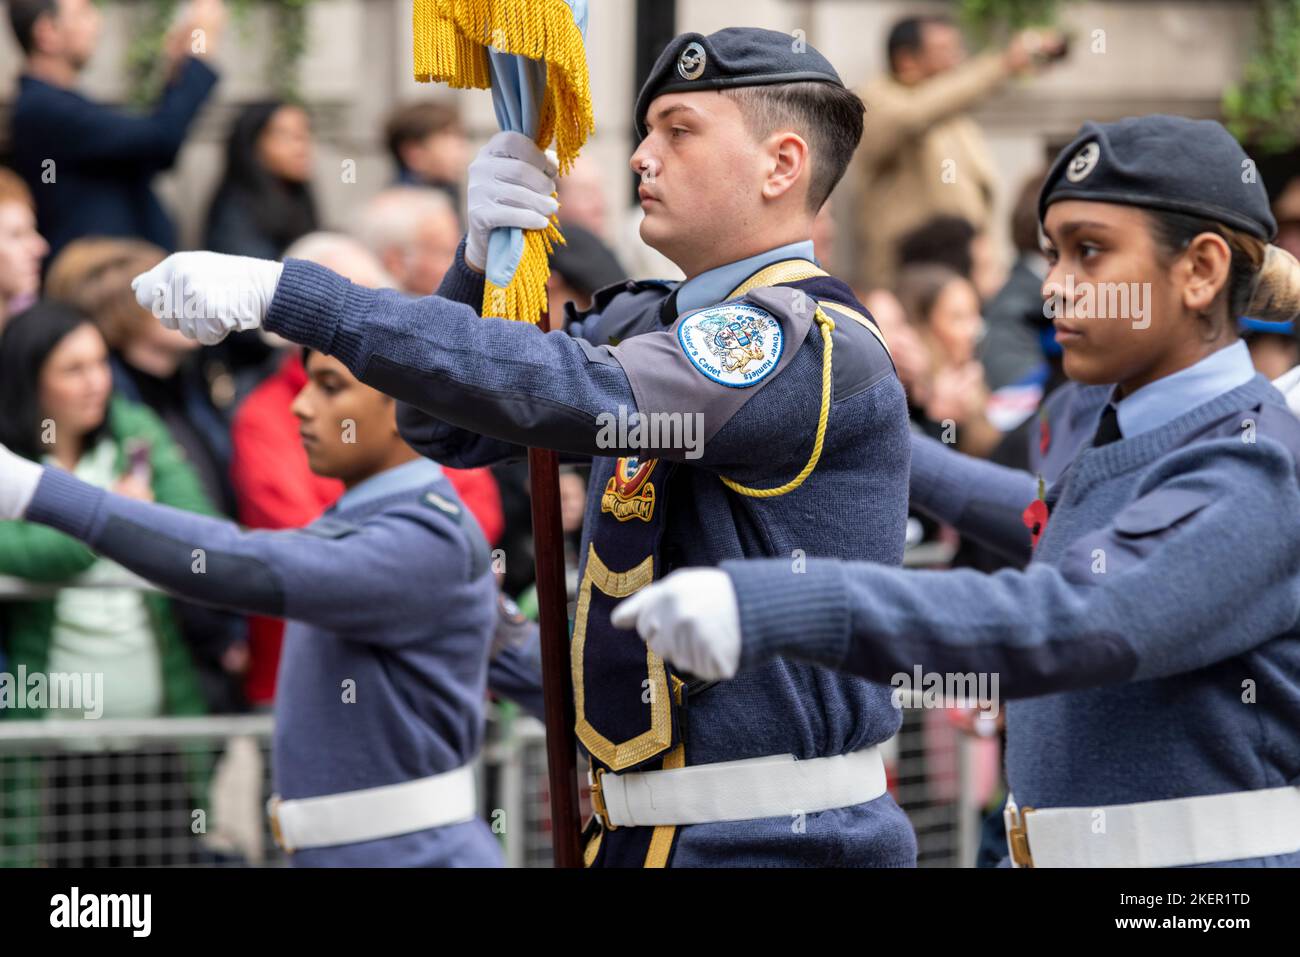 London & South East Region RAF Air Cadets bei der Lord Mayor's Show Parade in der City of London, Großbritannien. London Borough of Tower Hamlets Sprecher-Kadett Stockfoto